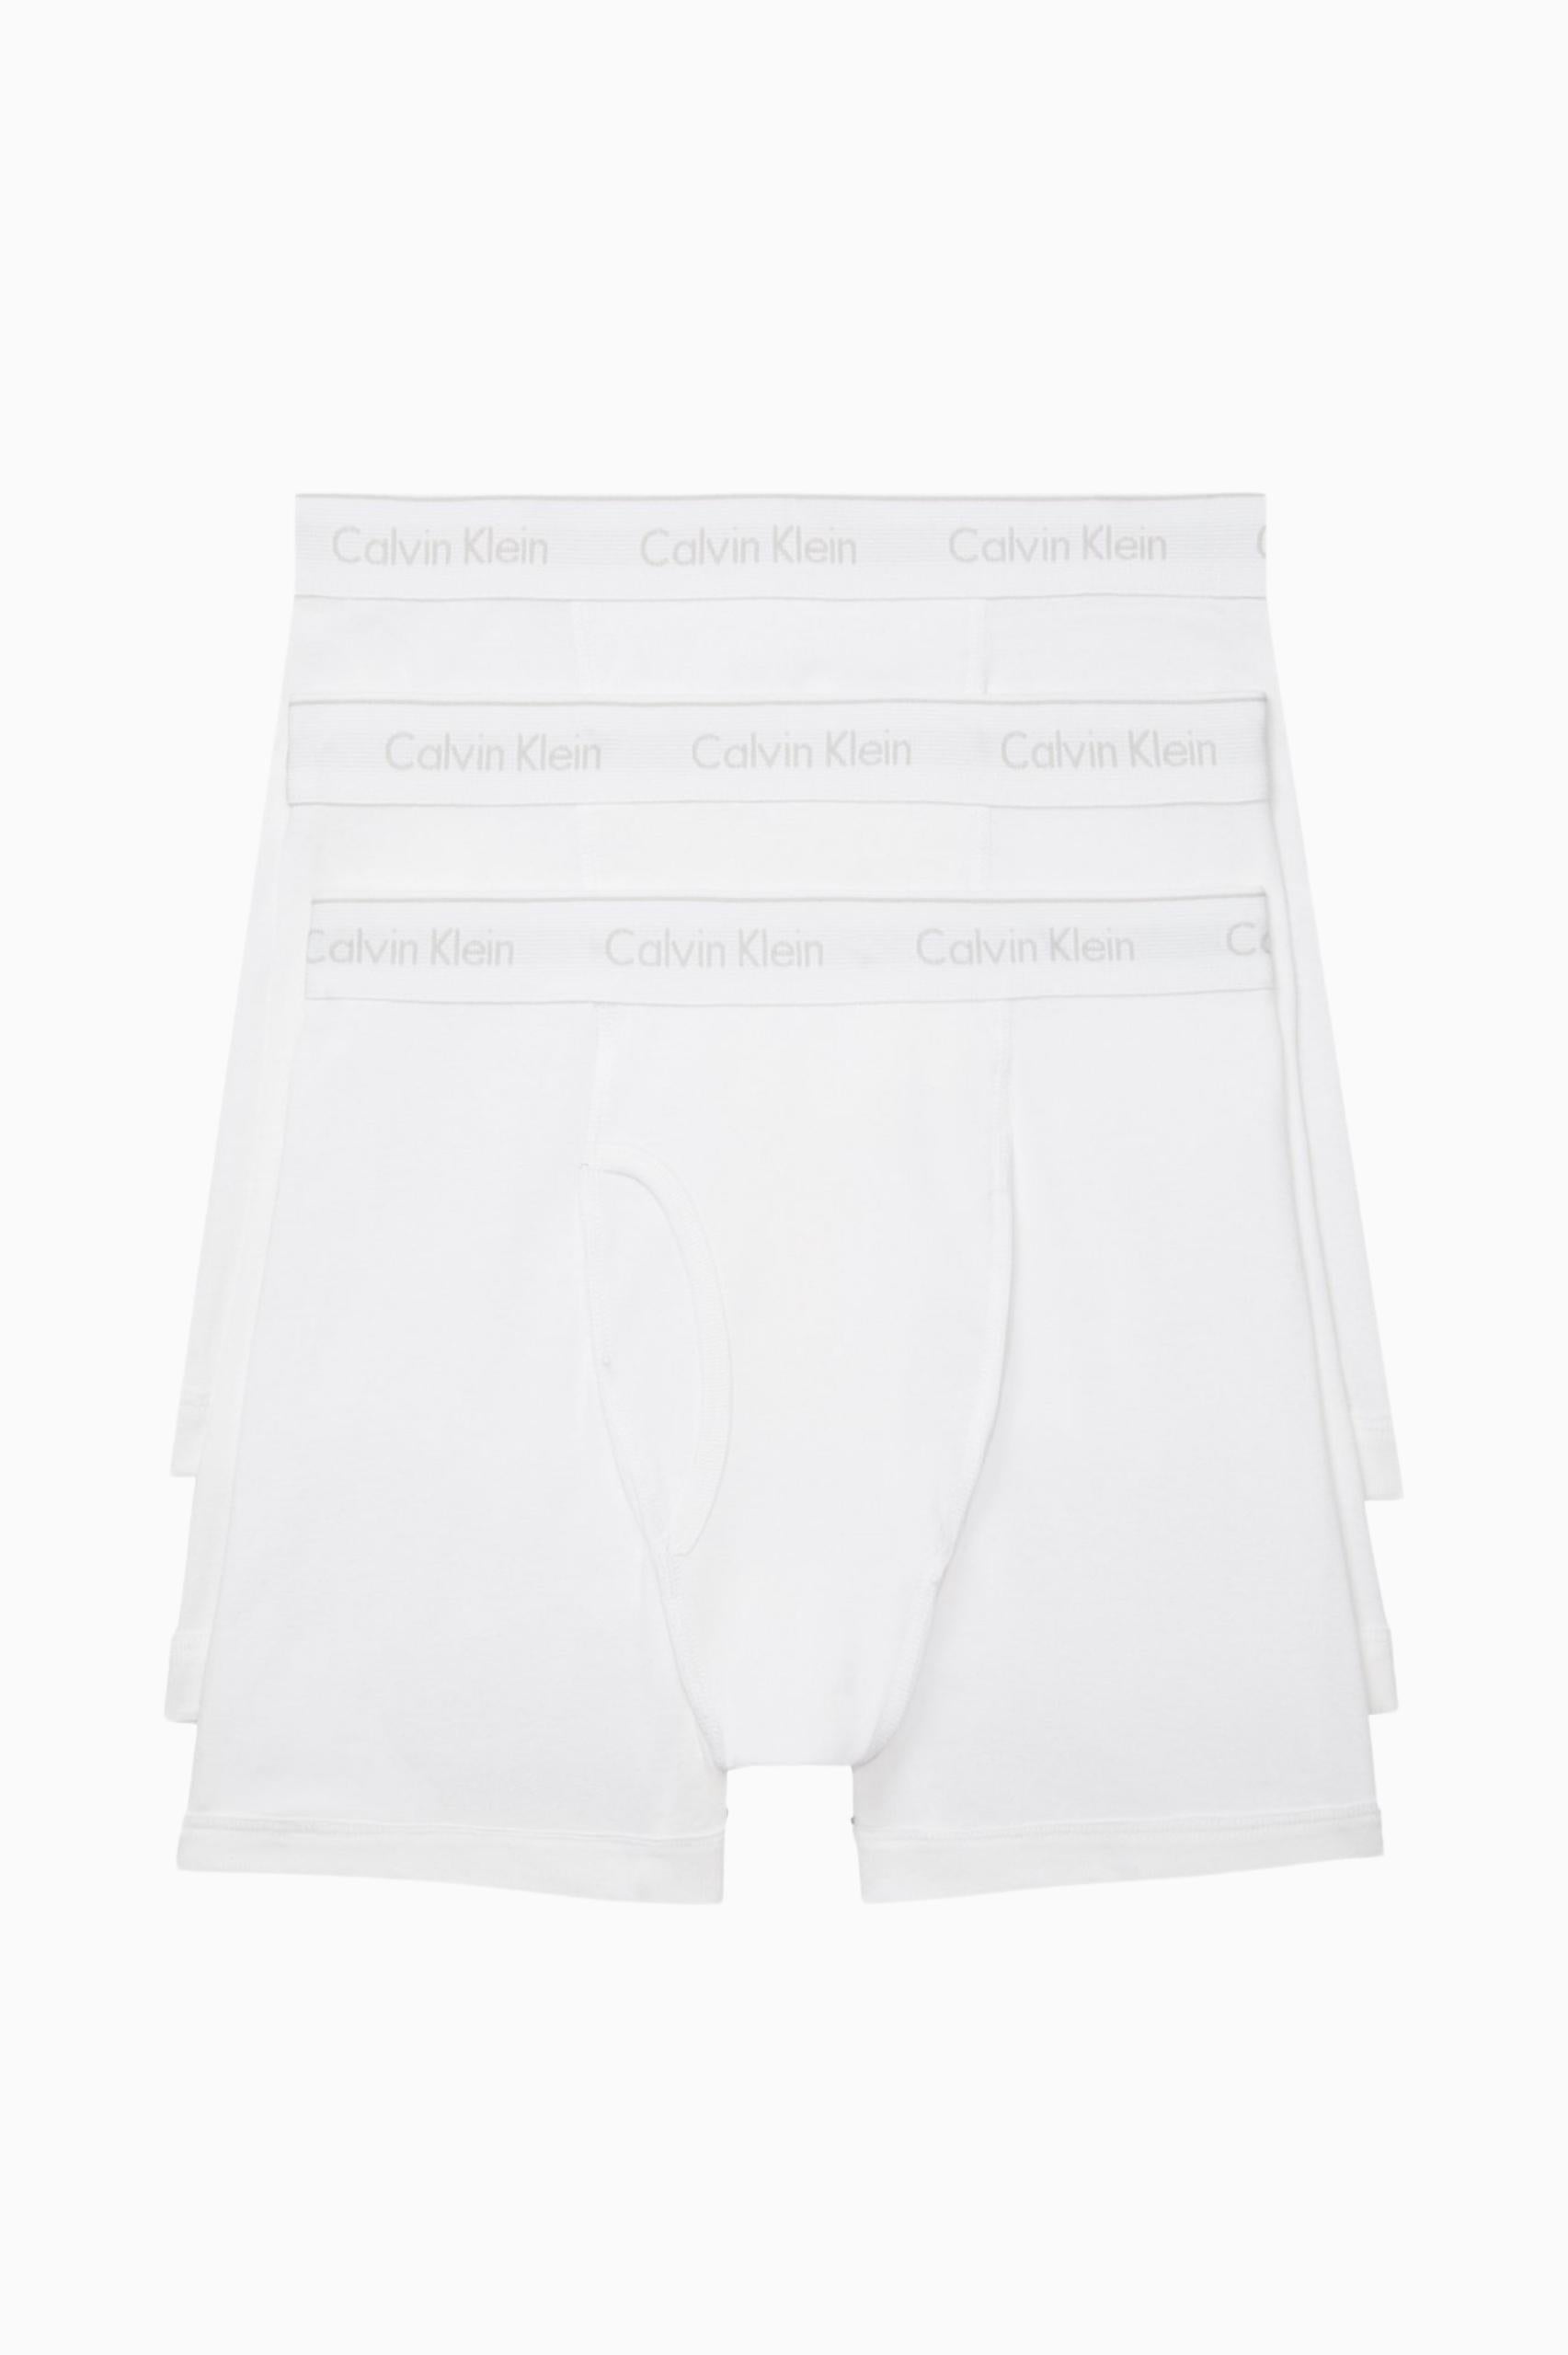 Calvin Klein Cotton Classics 3 Pack Boxer Brief